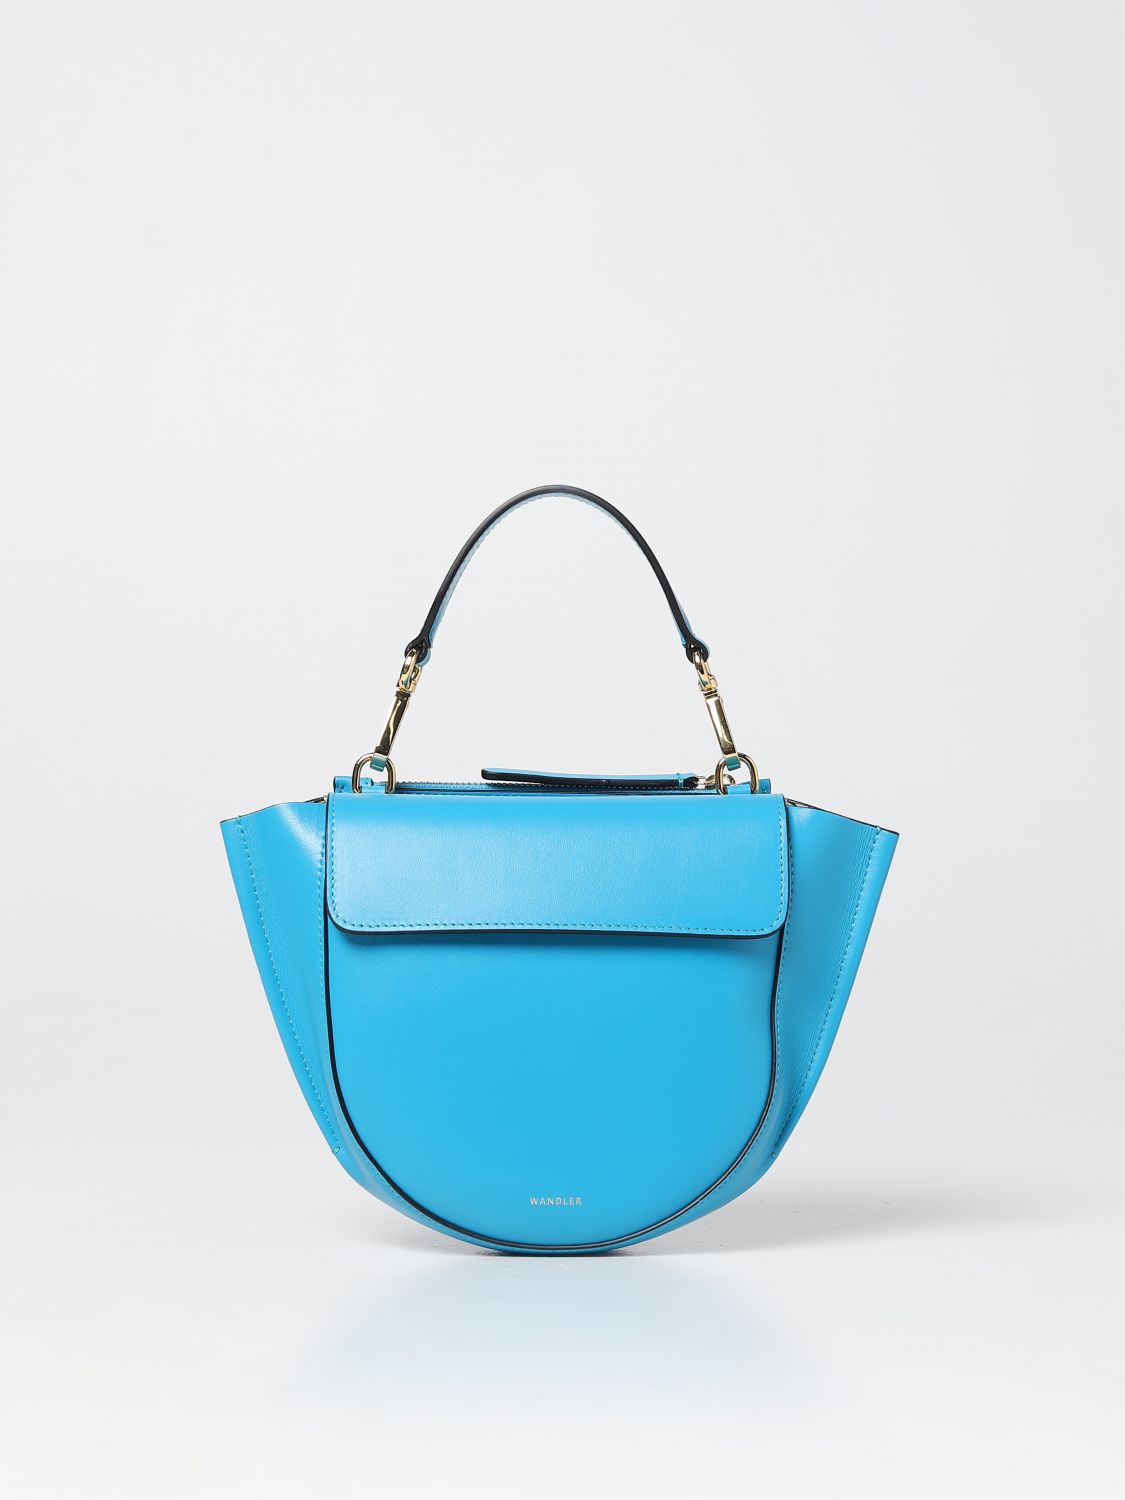 reliability dispersion rod WANDLER: handbag for woman - Blue | Wandler handbag 23104000025 online on  GIGLIO.COM